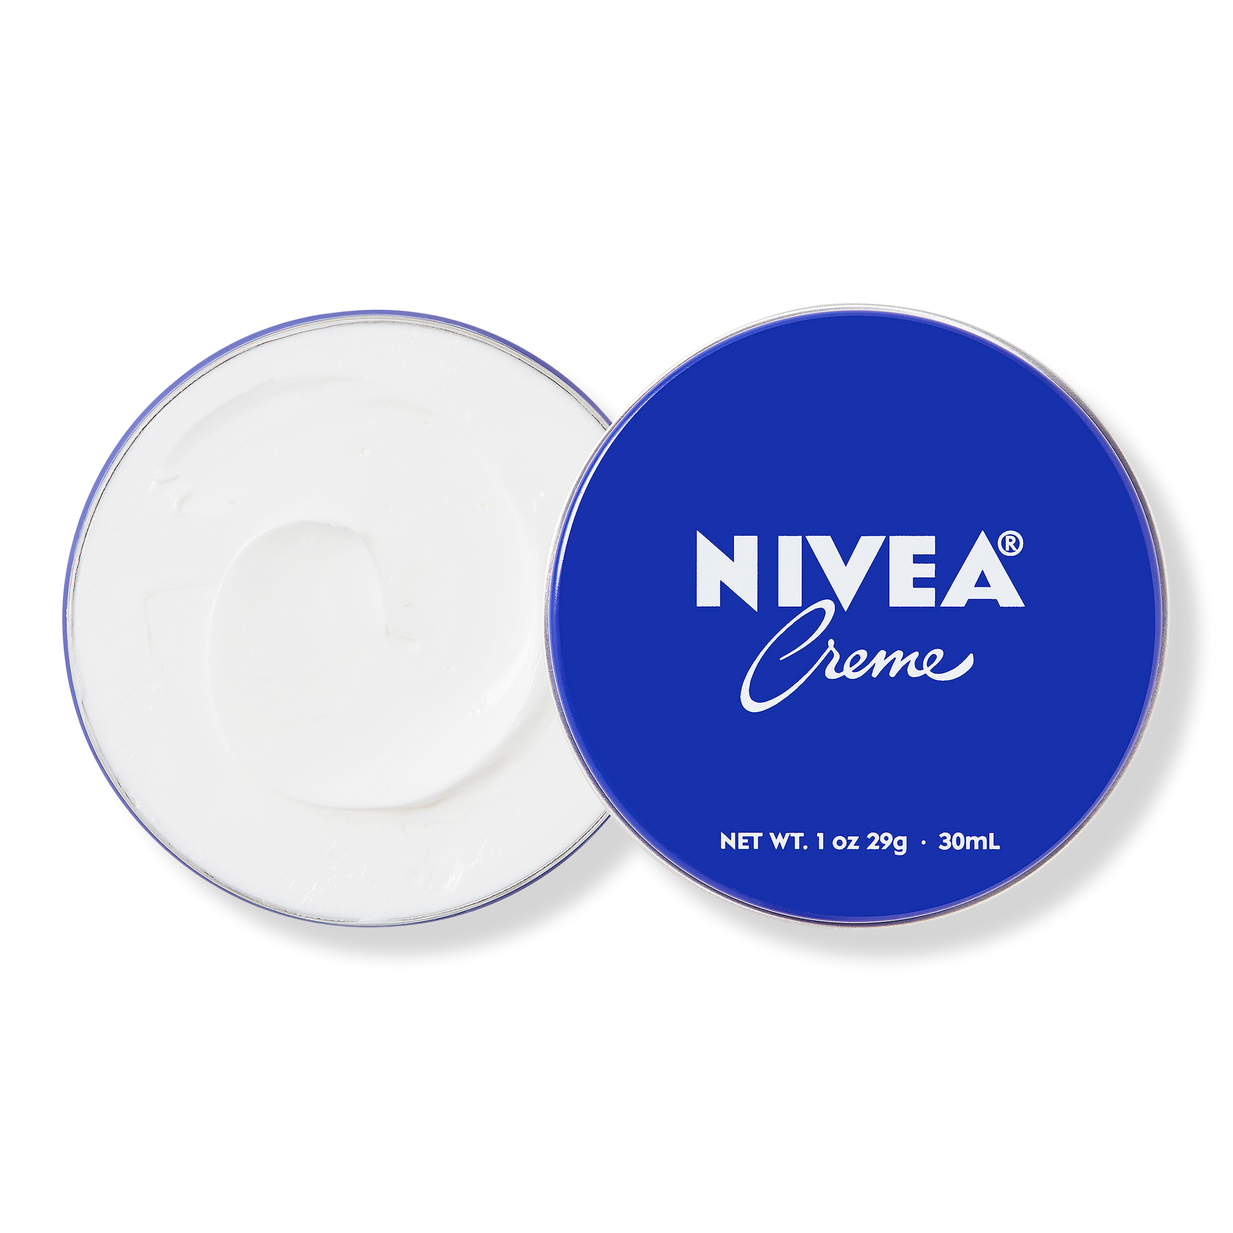 Travel Crème Tin - Nivea Ulta Beauty